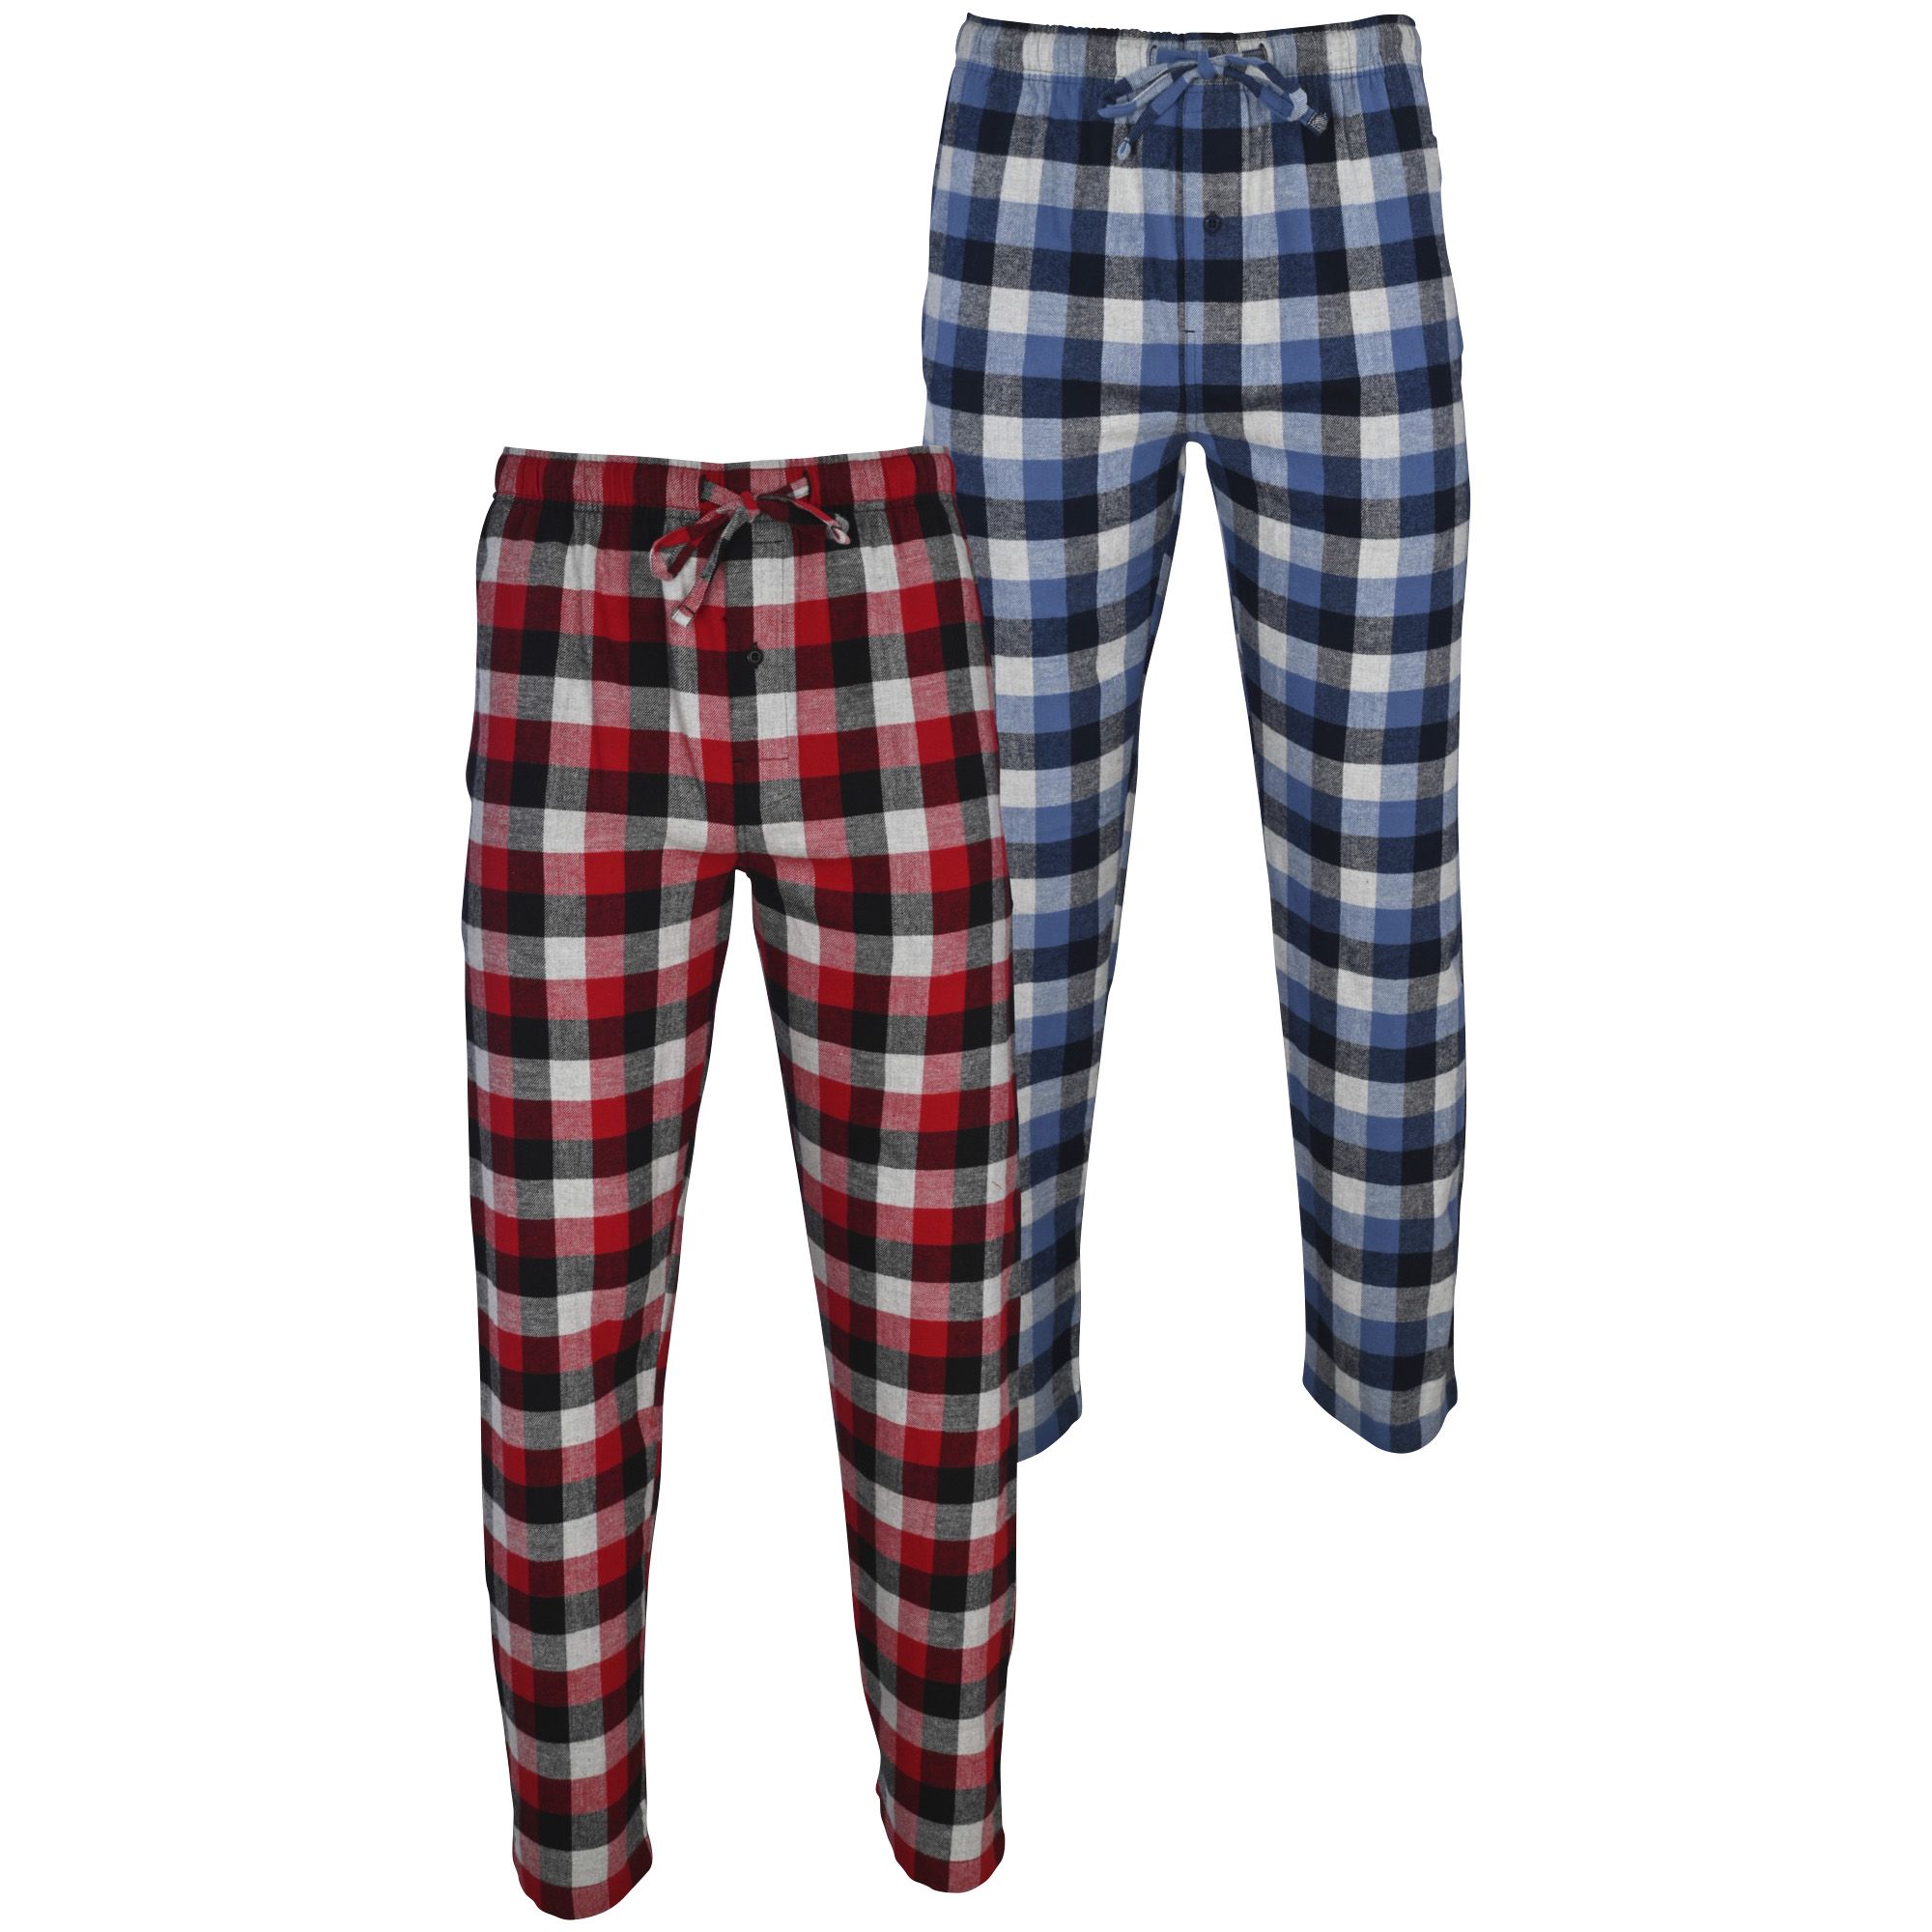 Fingerhut - Hanes Men's 2-Pack Flannel Sleep/Lounge Pants